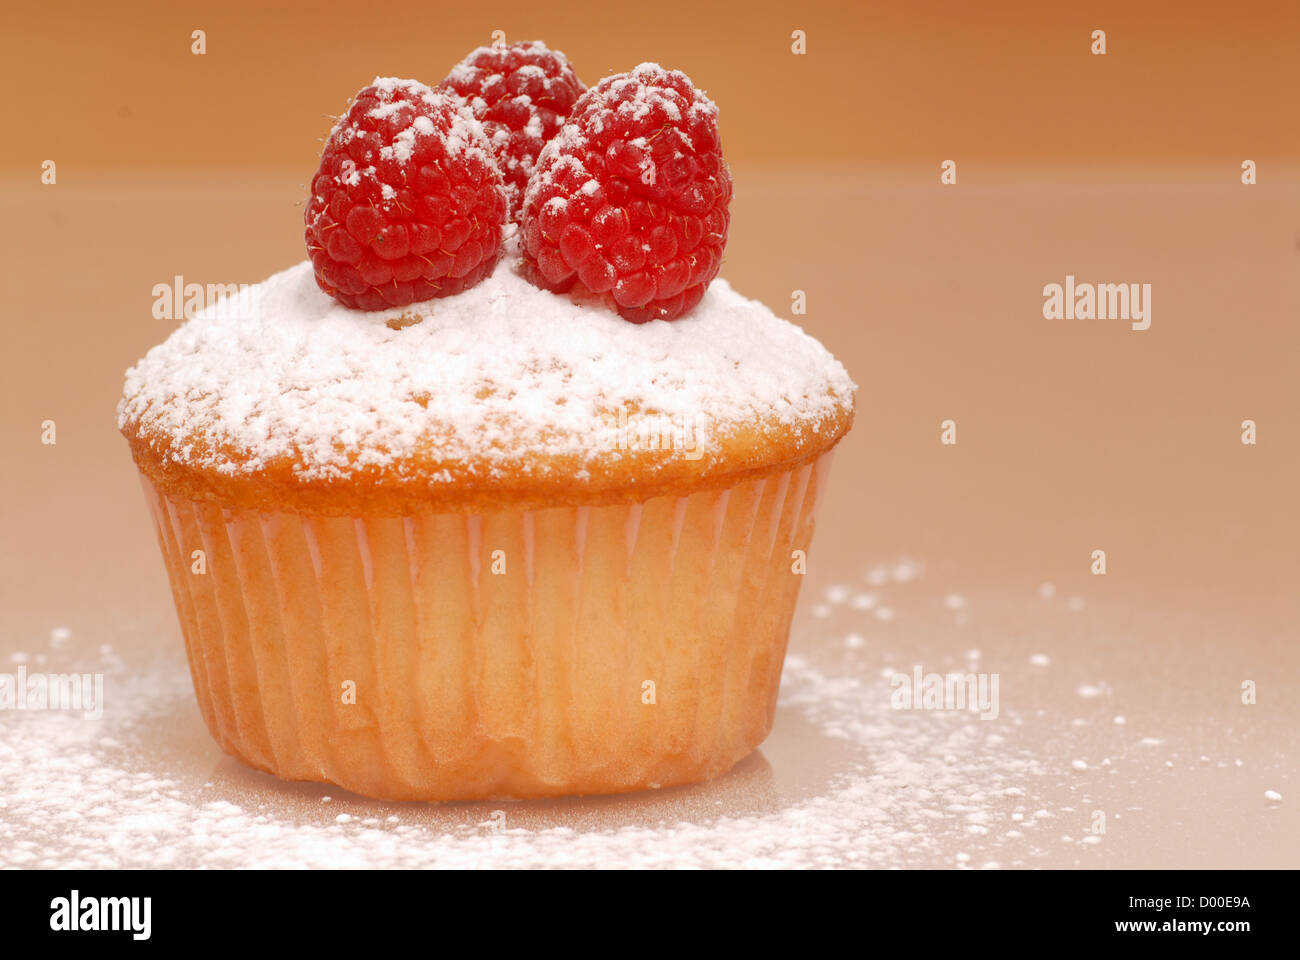 Freshly baked vanilla cupcake with raspberries and powdered sugar Stock Photo